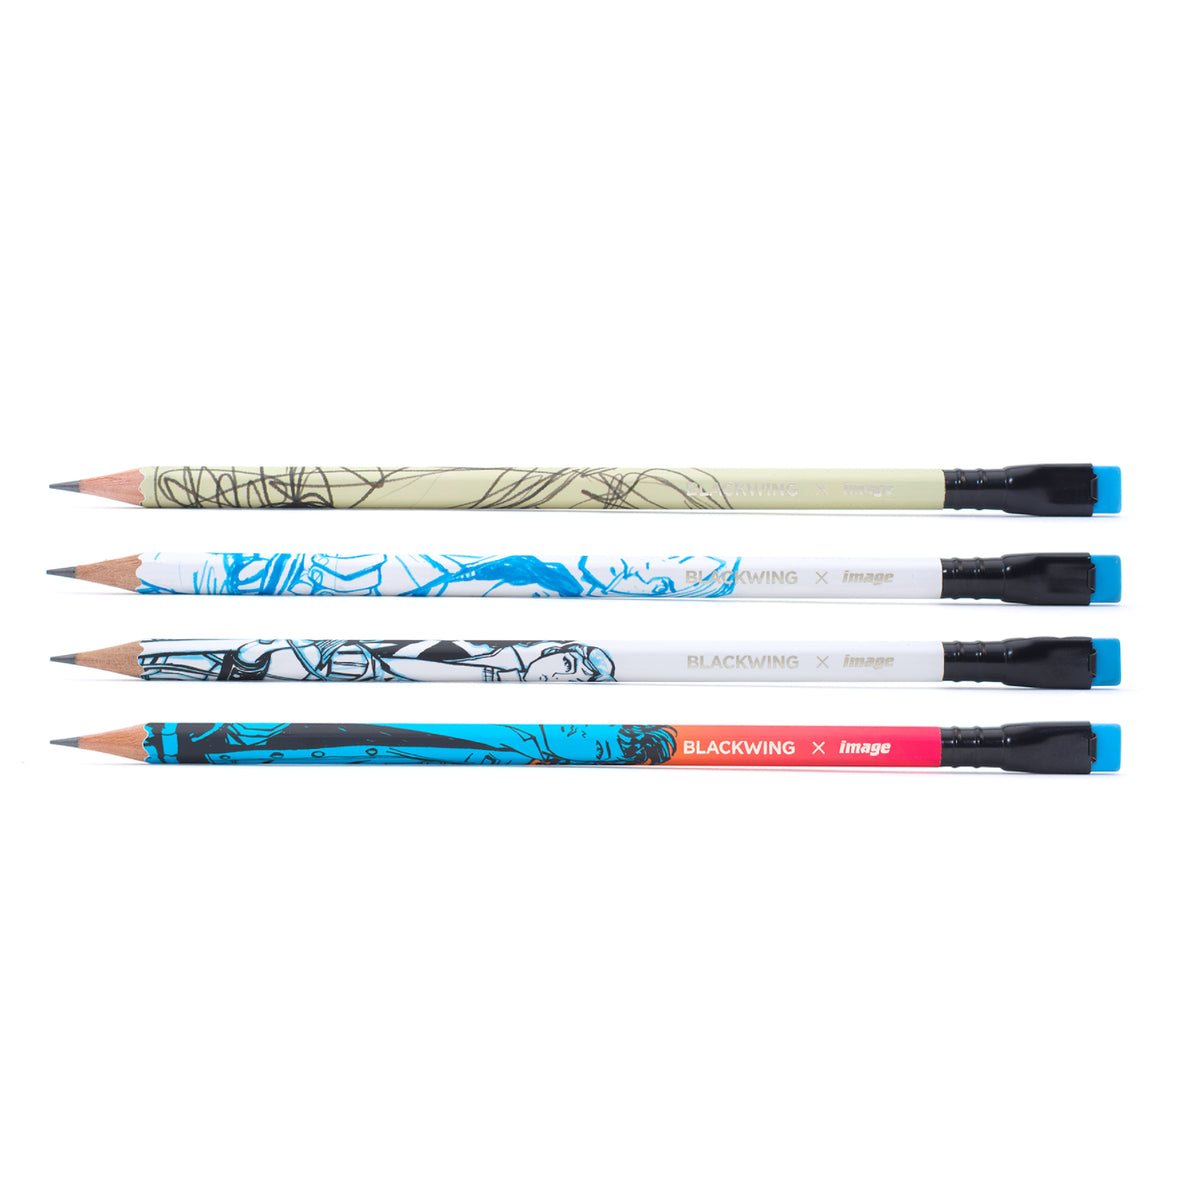 Four Blackwing x Image Comics (Set of 12) pencils with unique designs.